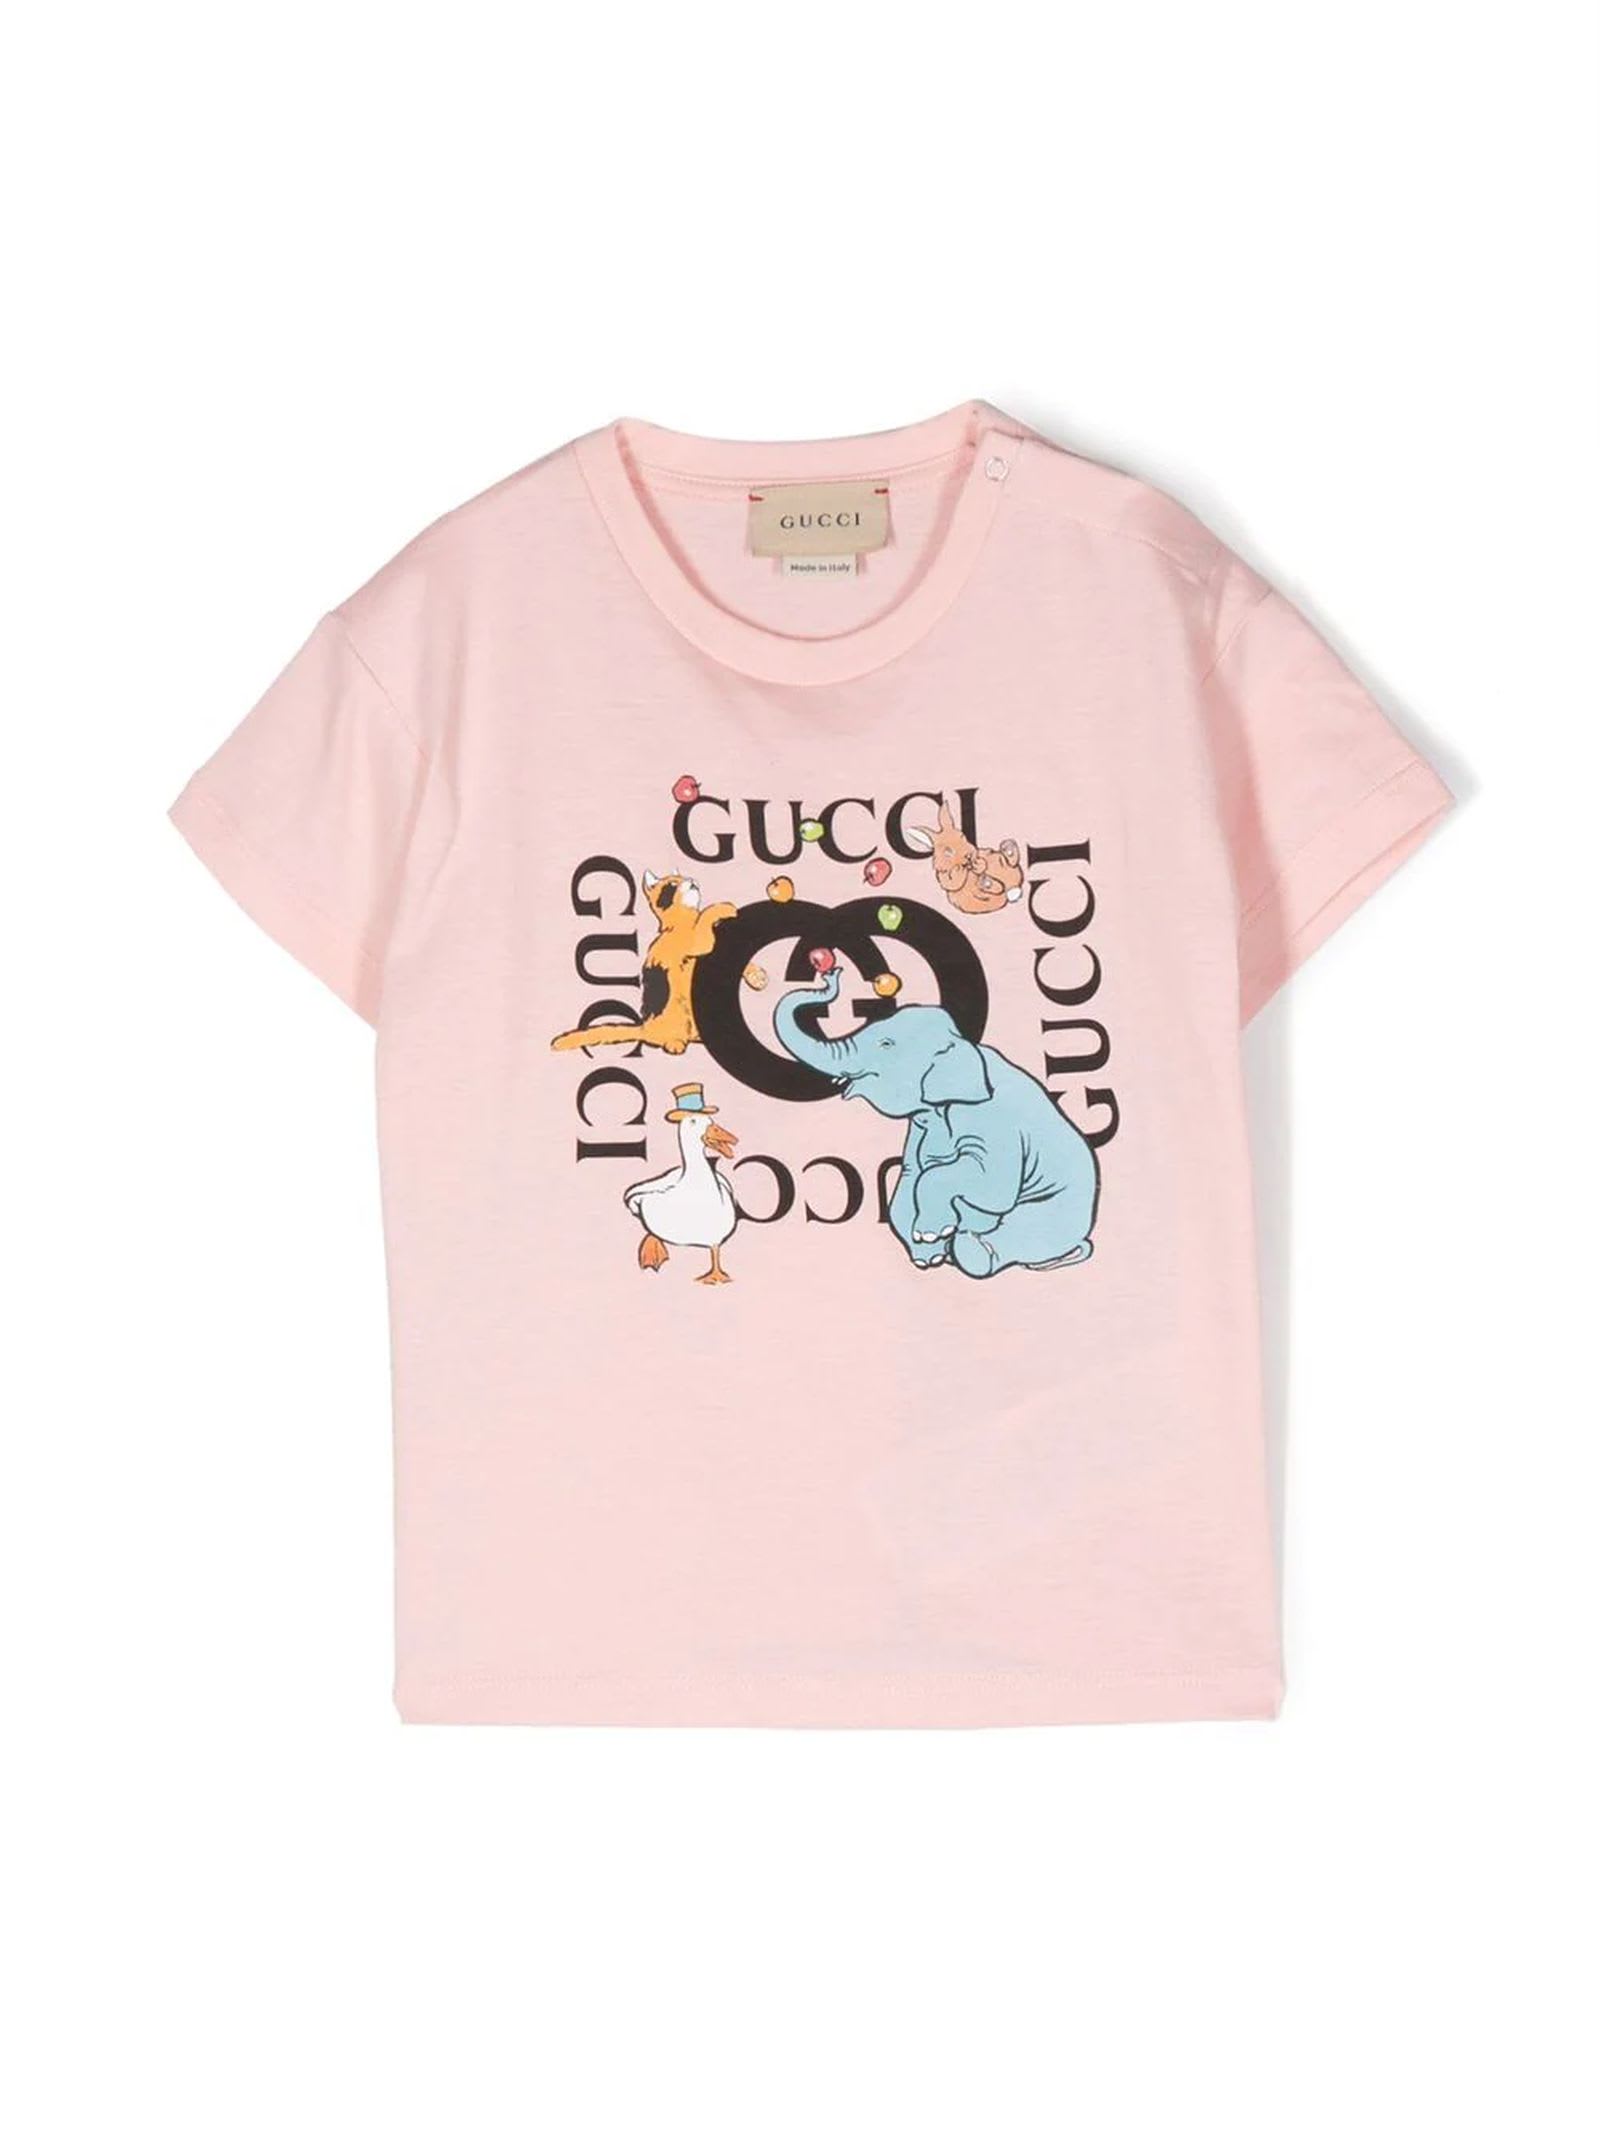 Gucci Pink Cotton Tshirt